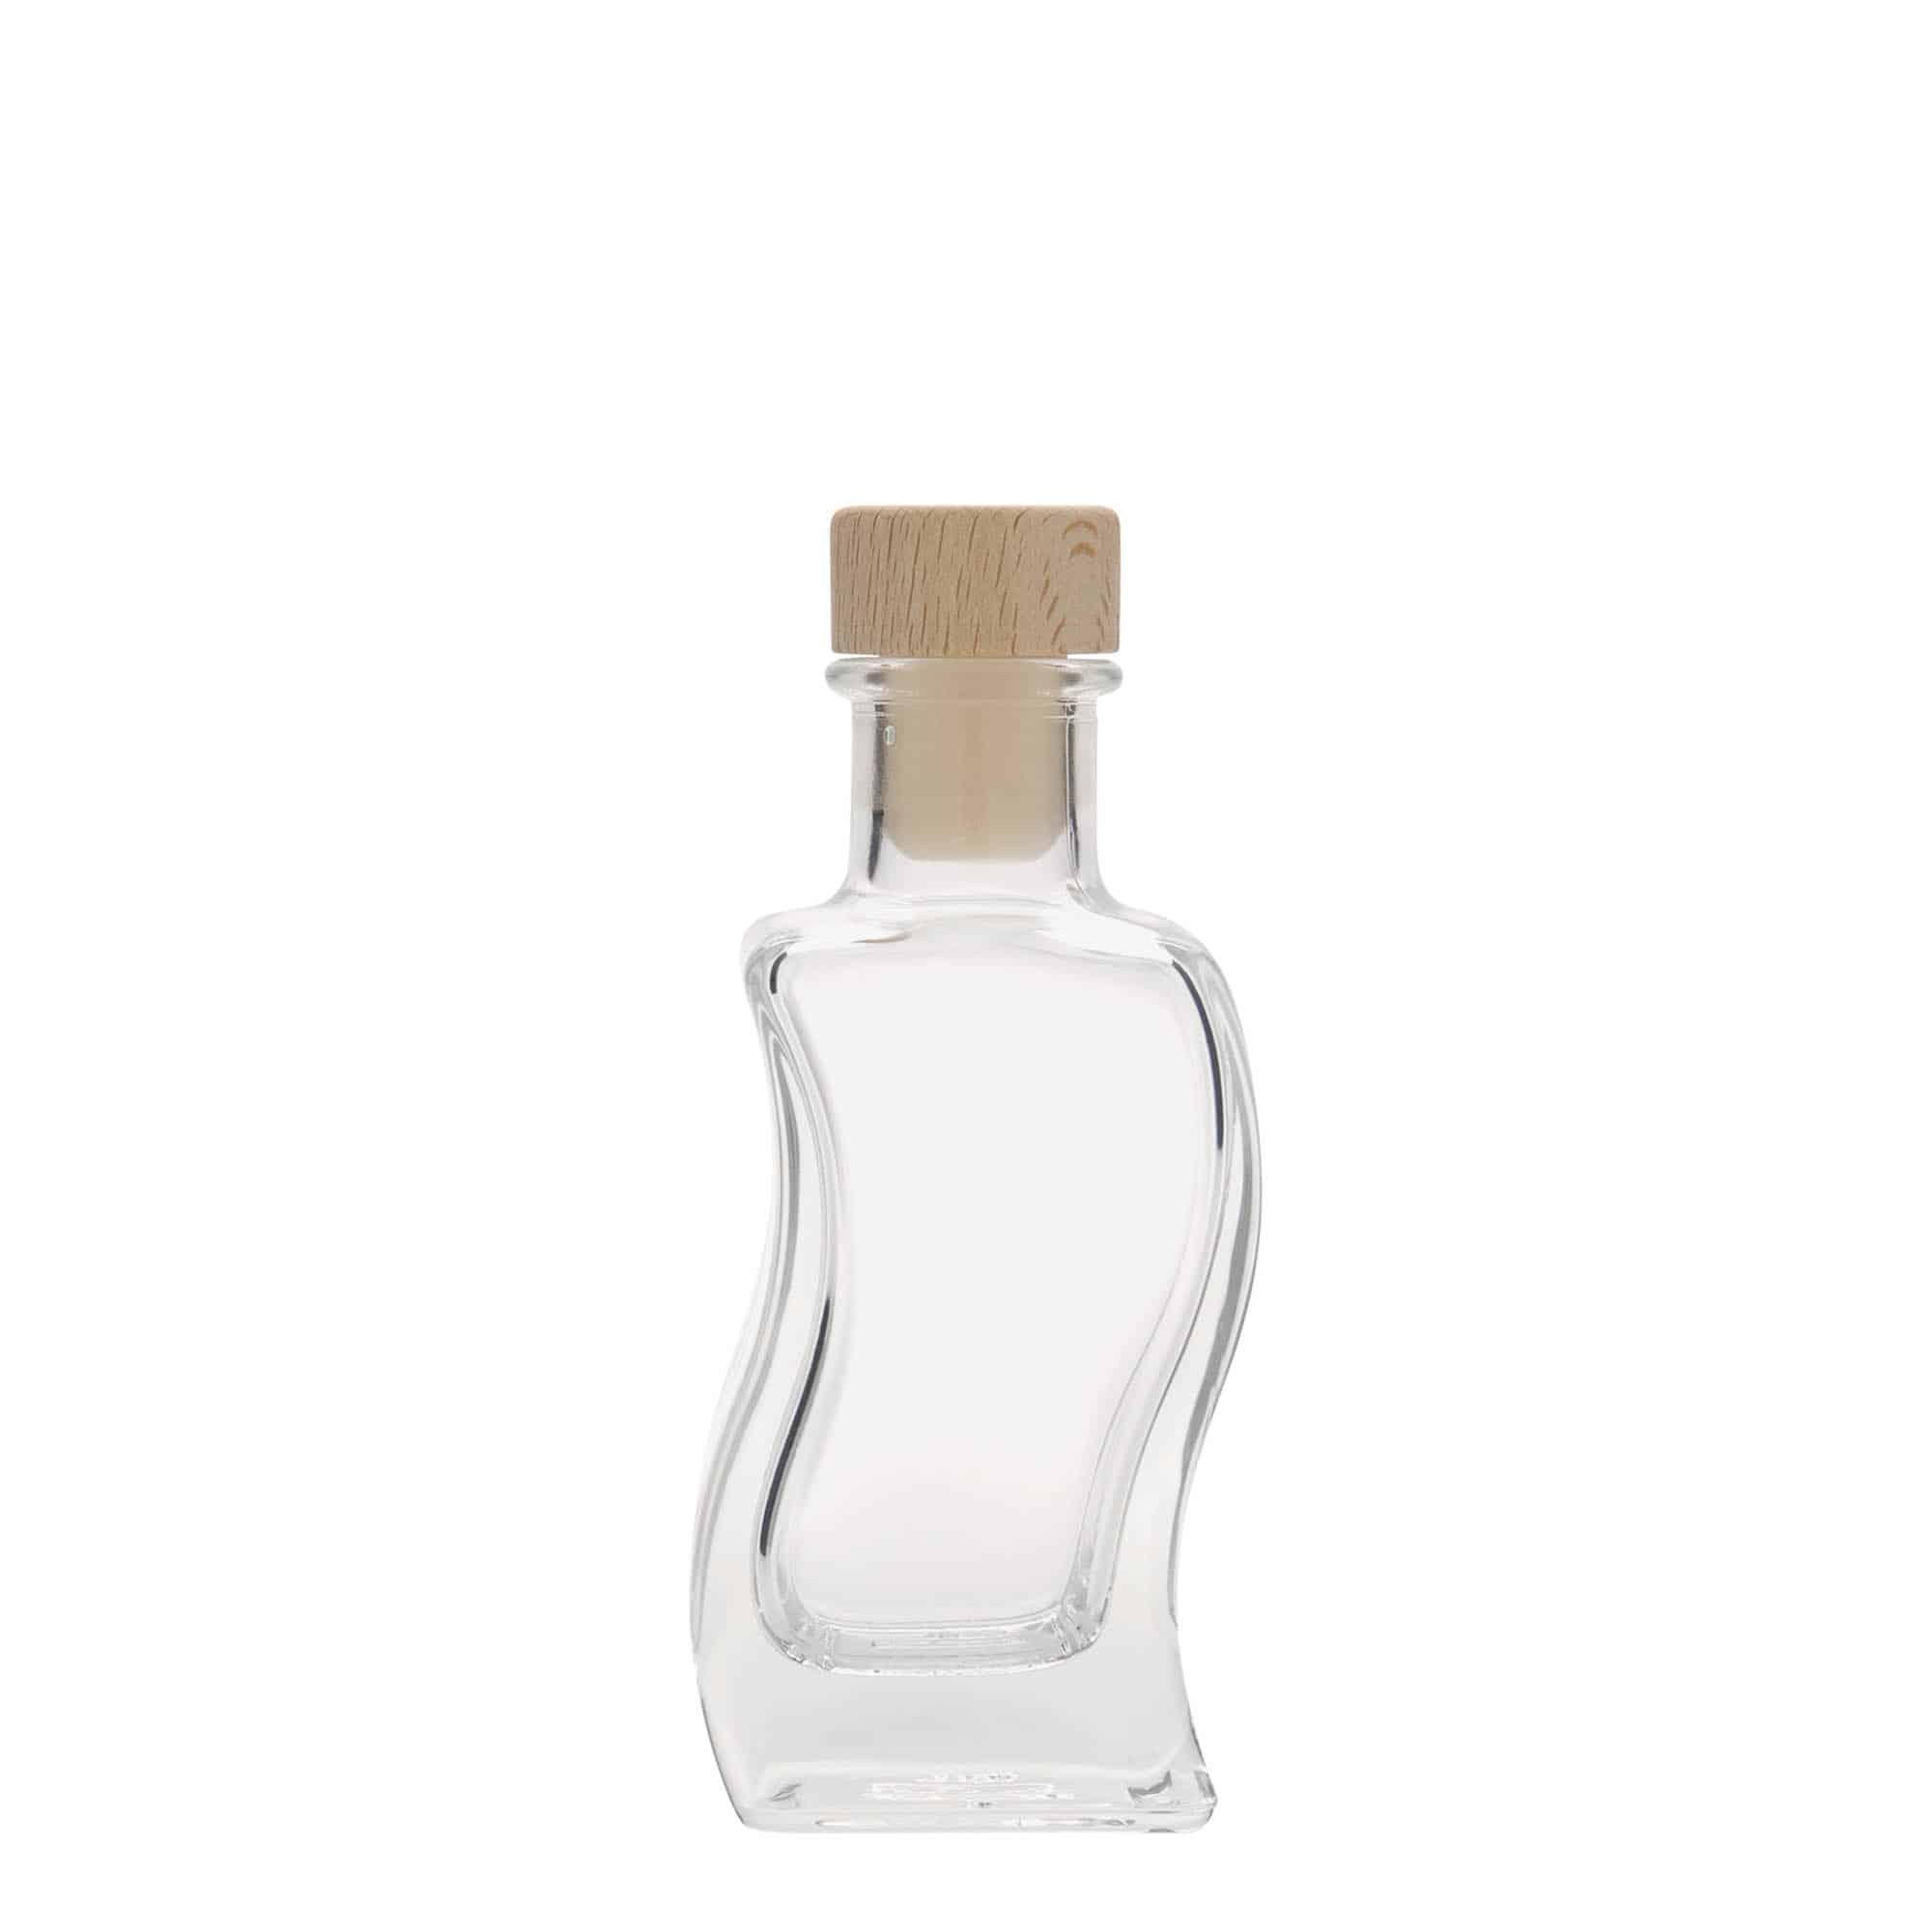 Botella de vidrio 'Onda' de 100 ml, cuadrada, boca: corcho